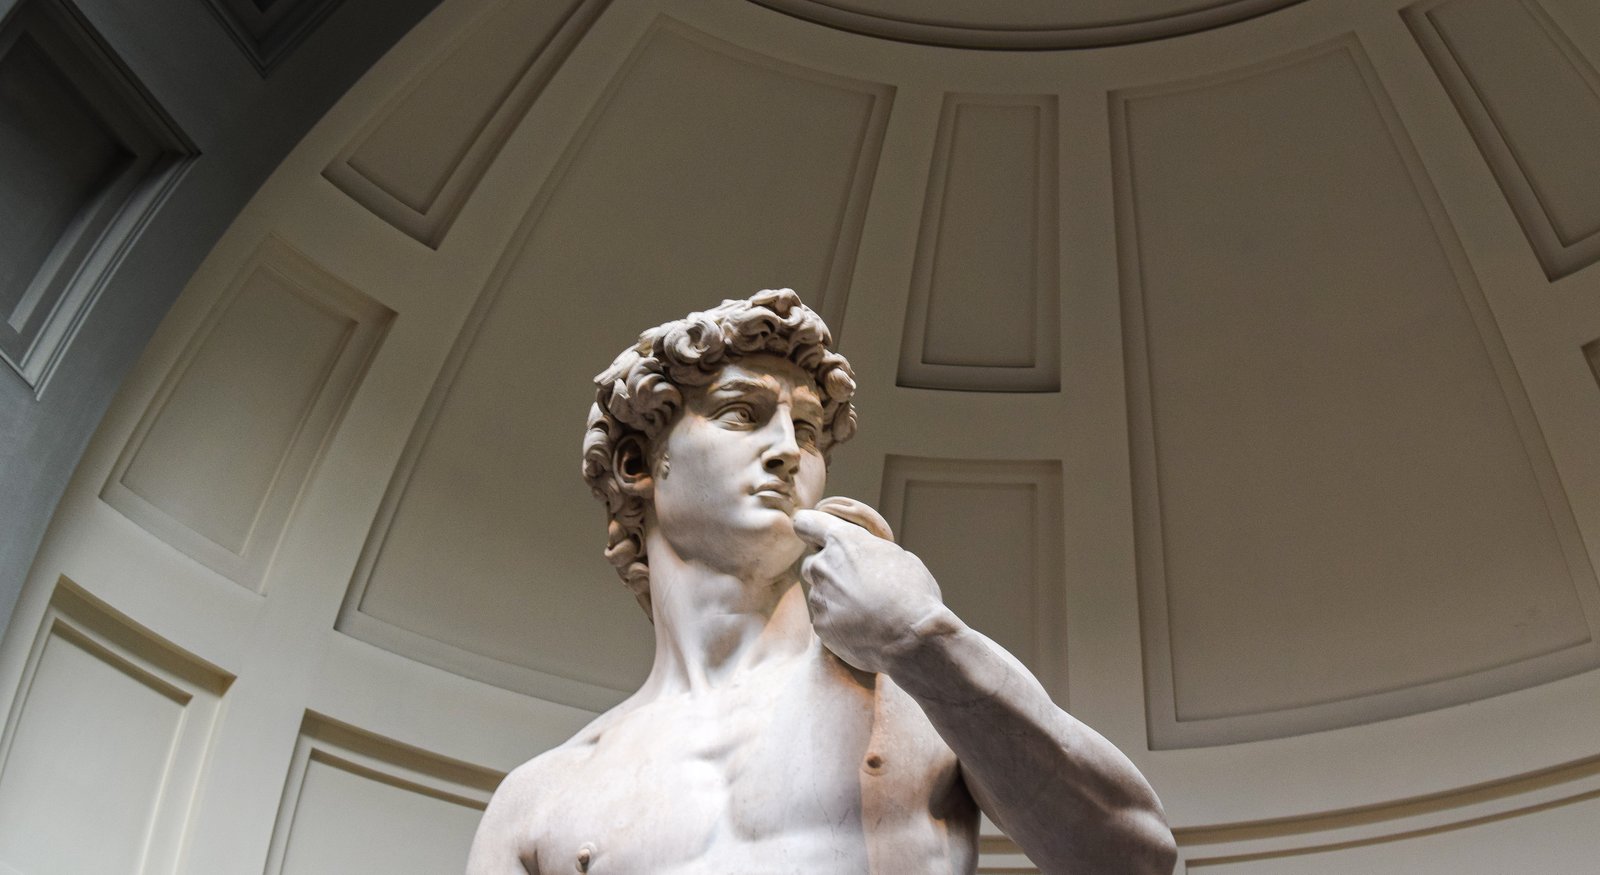 Famous statue of David (as in David vs Goliath)